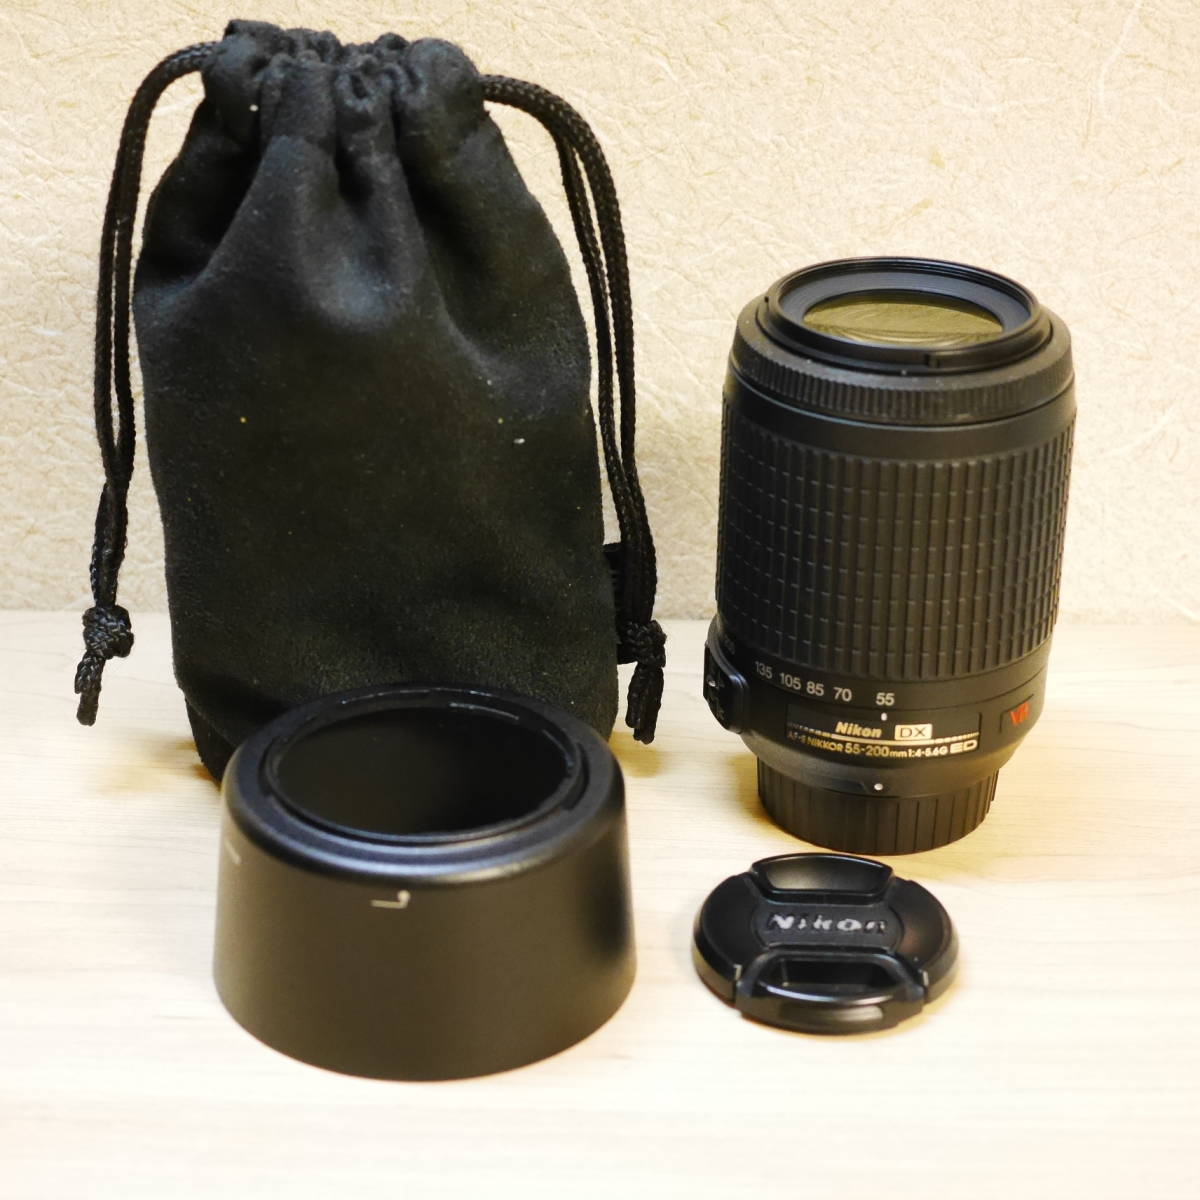 ニコン Nikon Nikkor AF-S 55-200mm 1:4-5.6 G ED DX VR